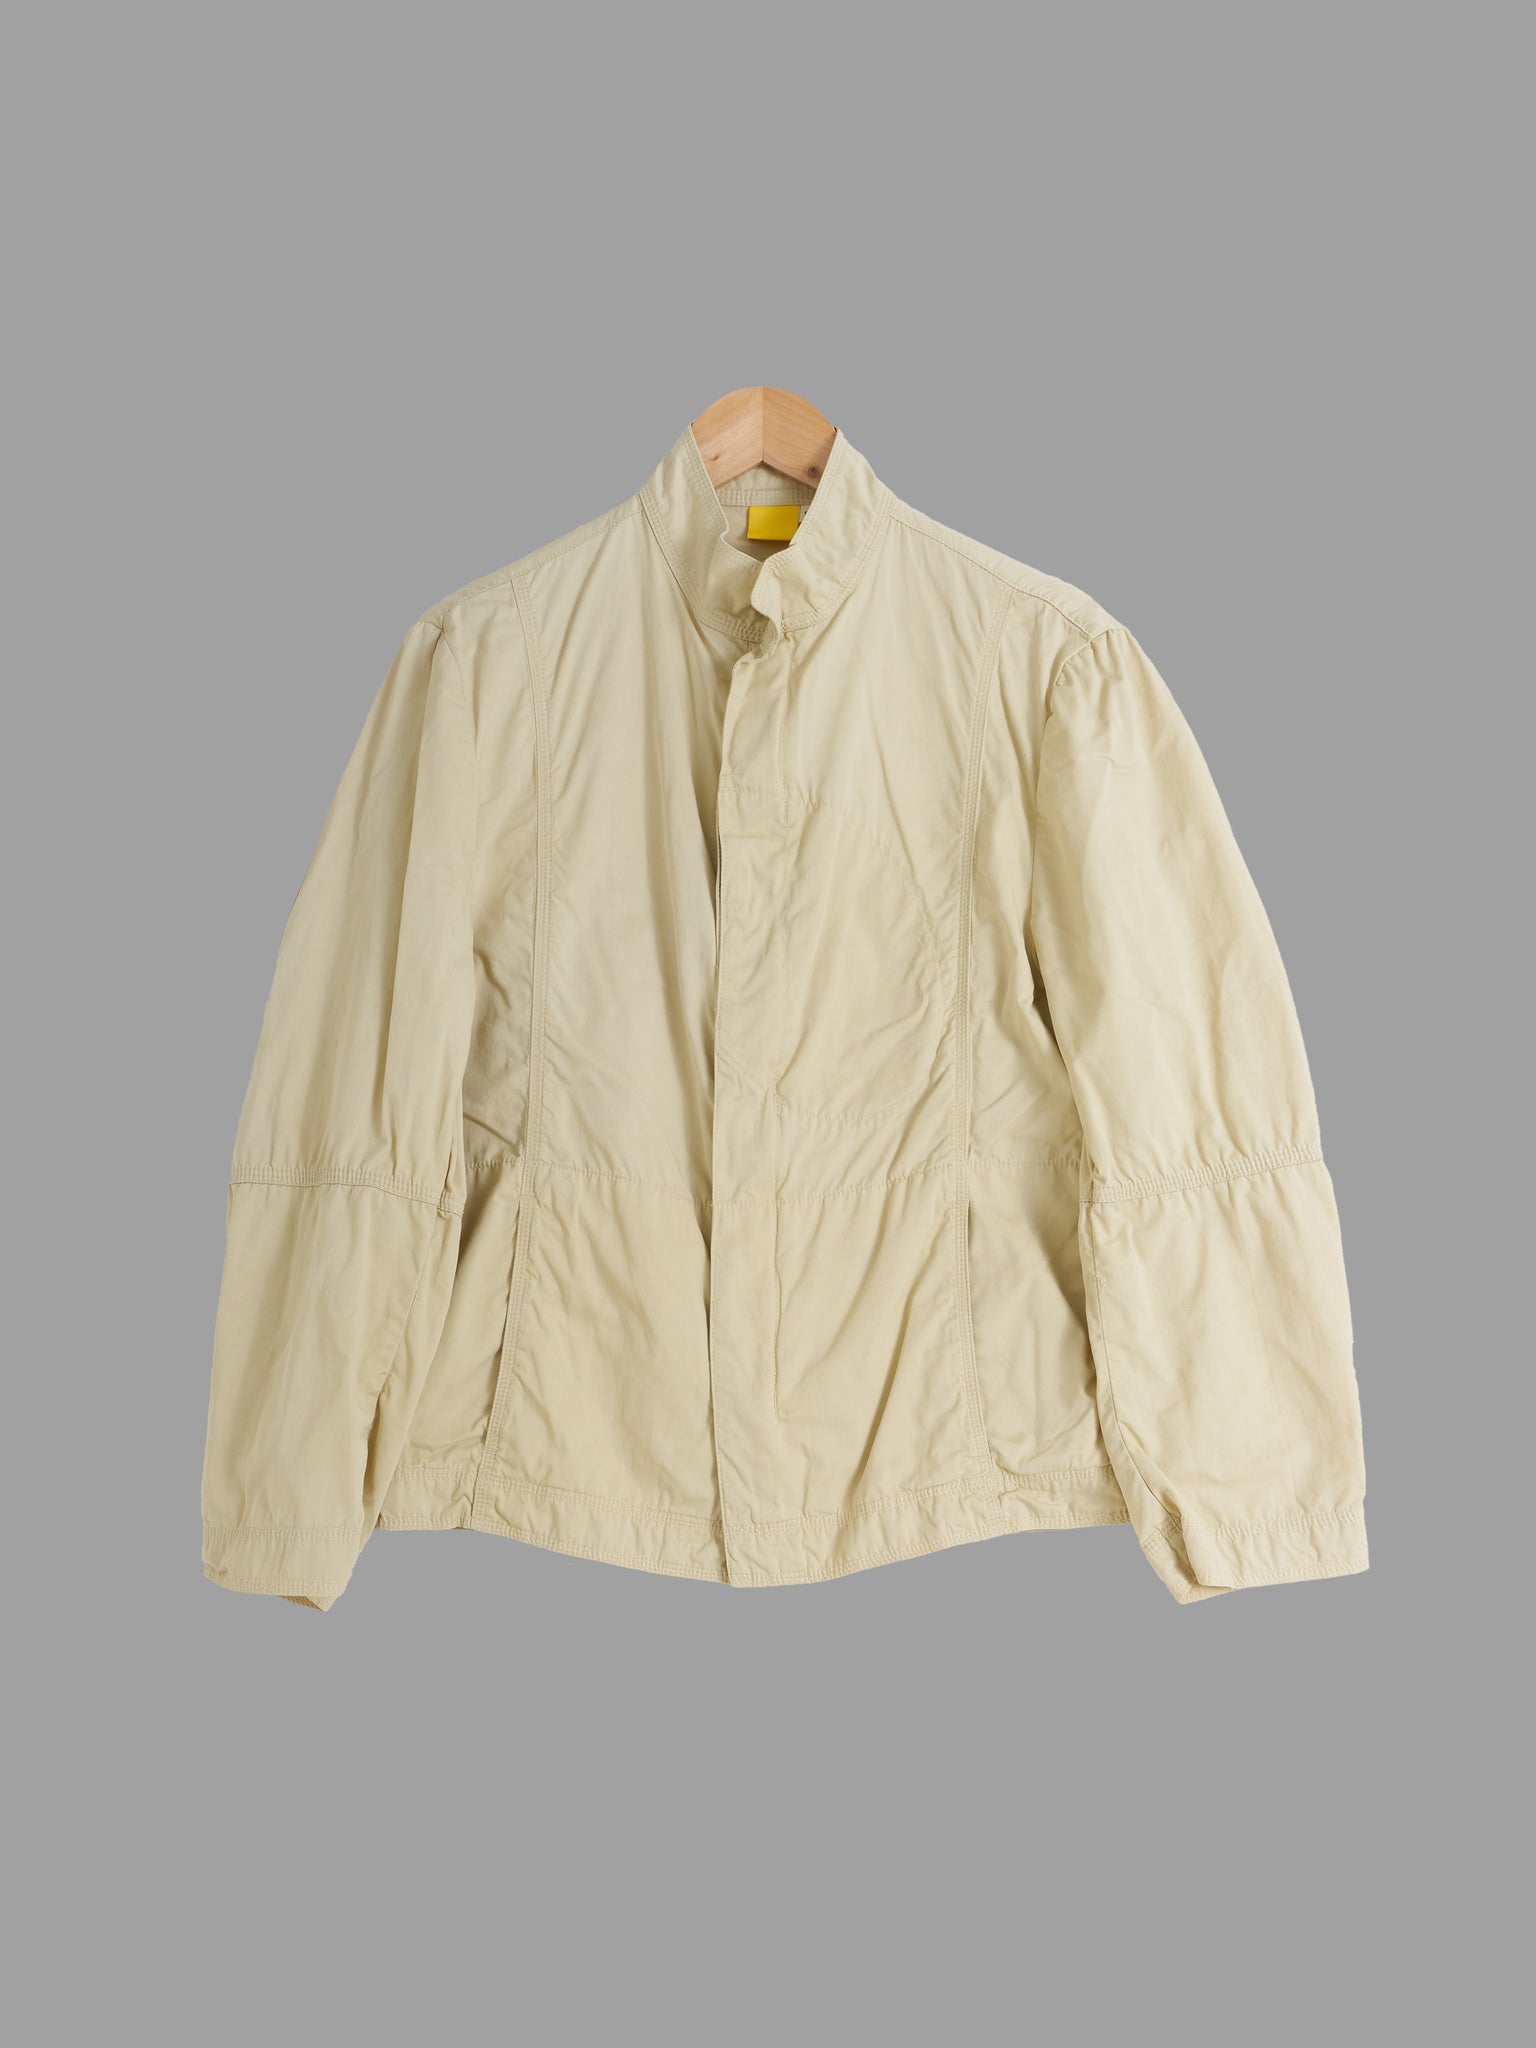 Mandarina Duck 1990s beige cotton stand collar jacket - womens IT 46 M L